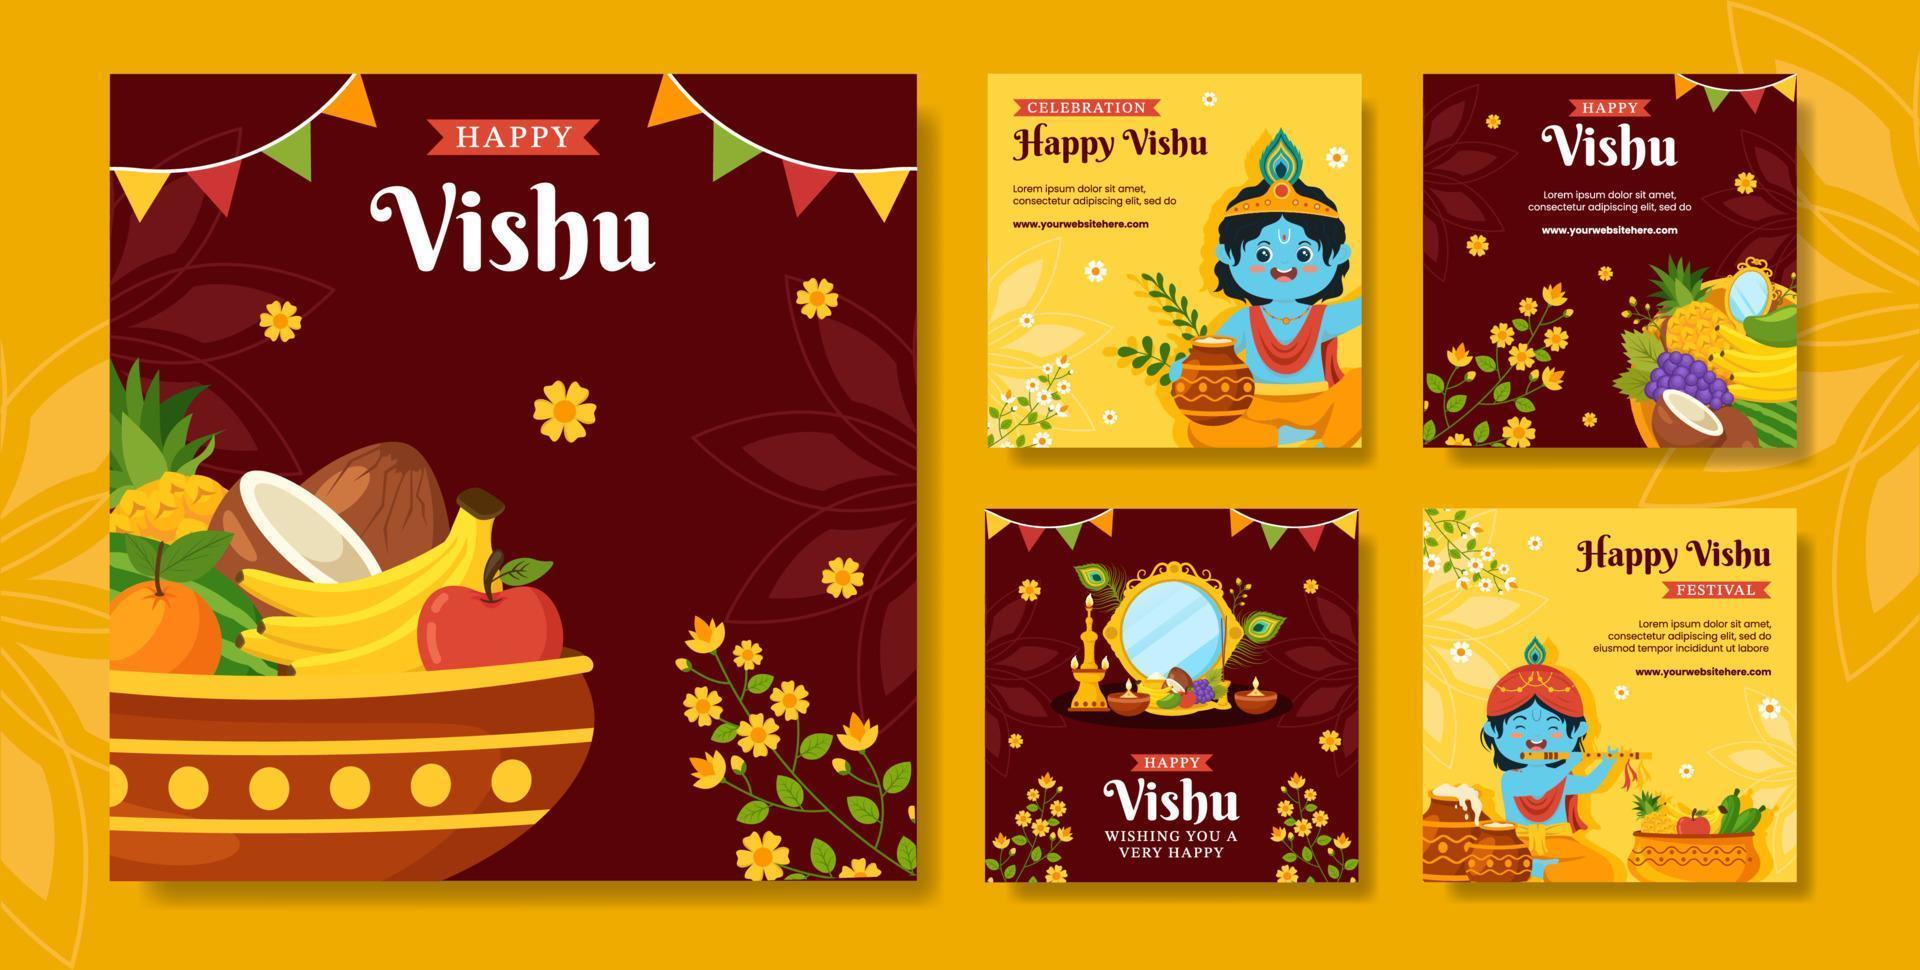 Happy Vishu Festival Social Media Post Flat Cartoon Hand Drawn Templates Background Illustration vector